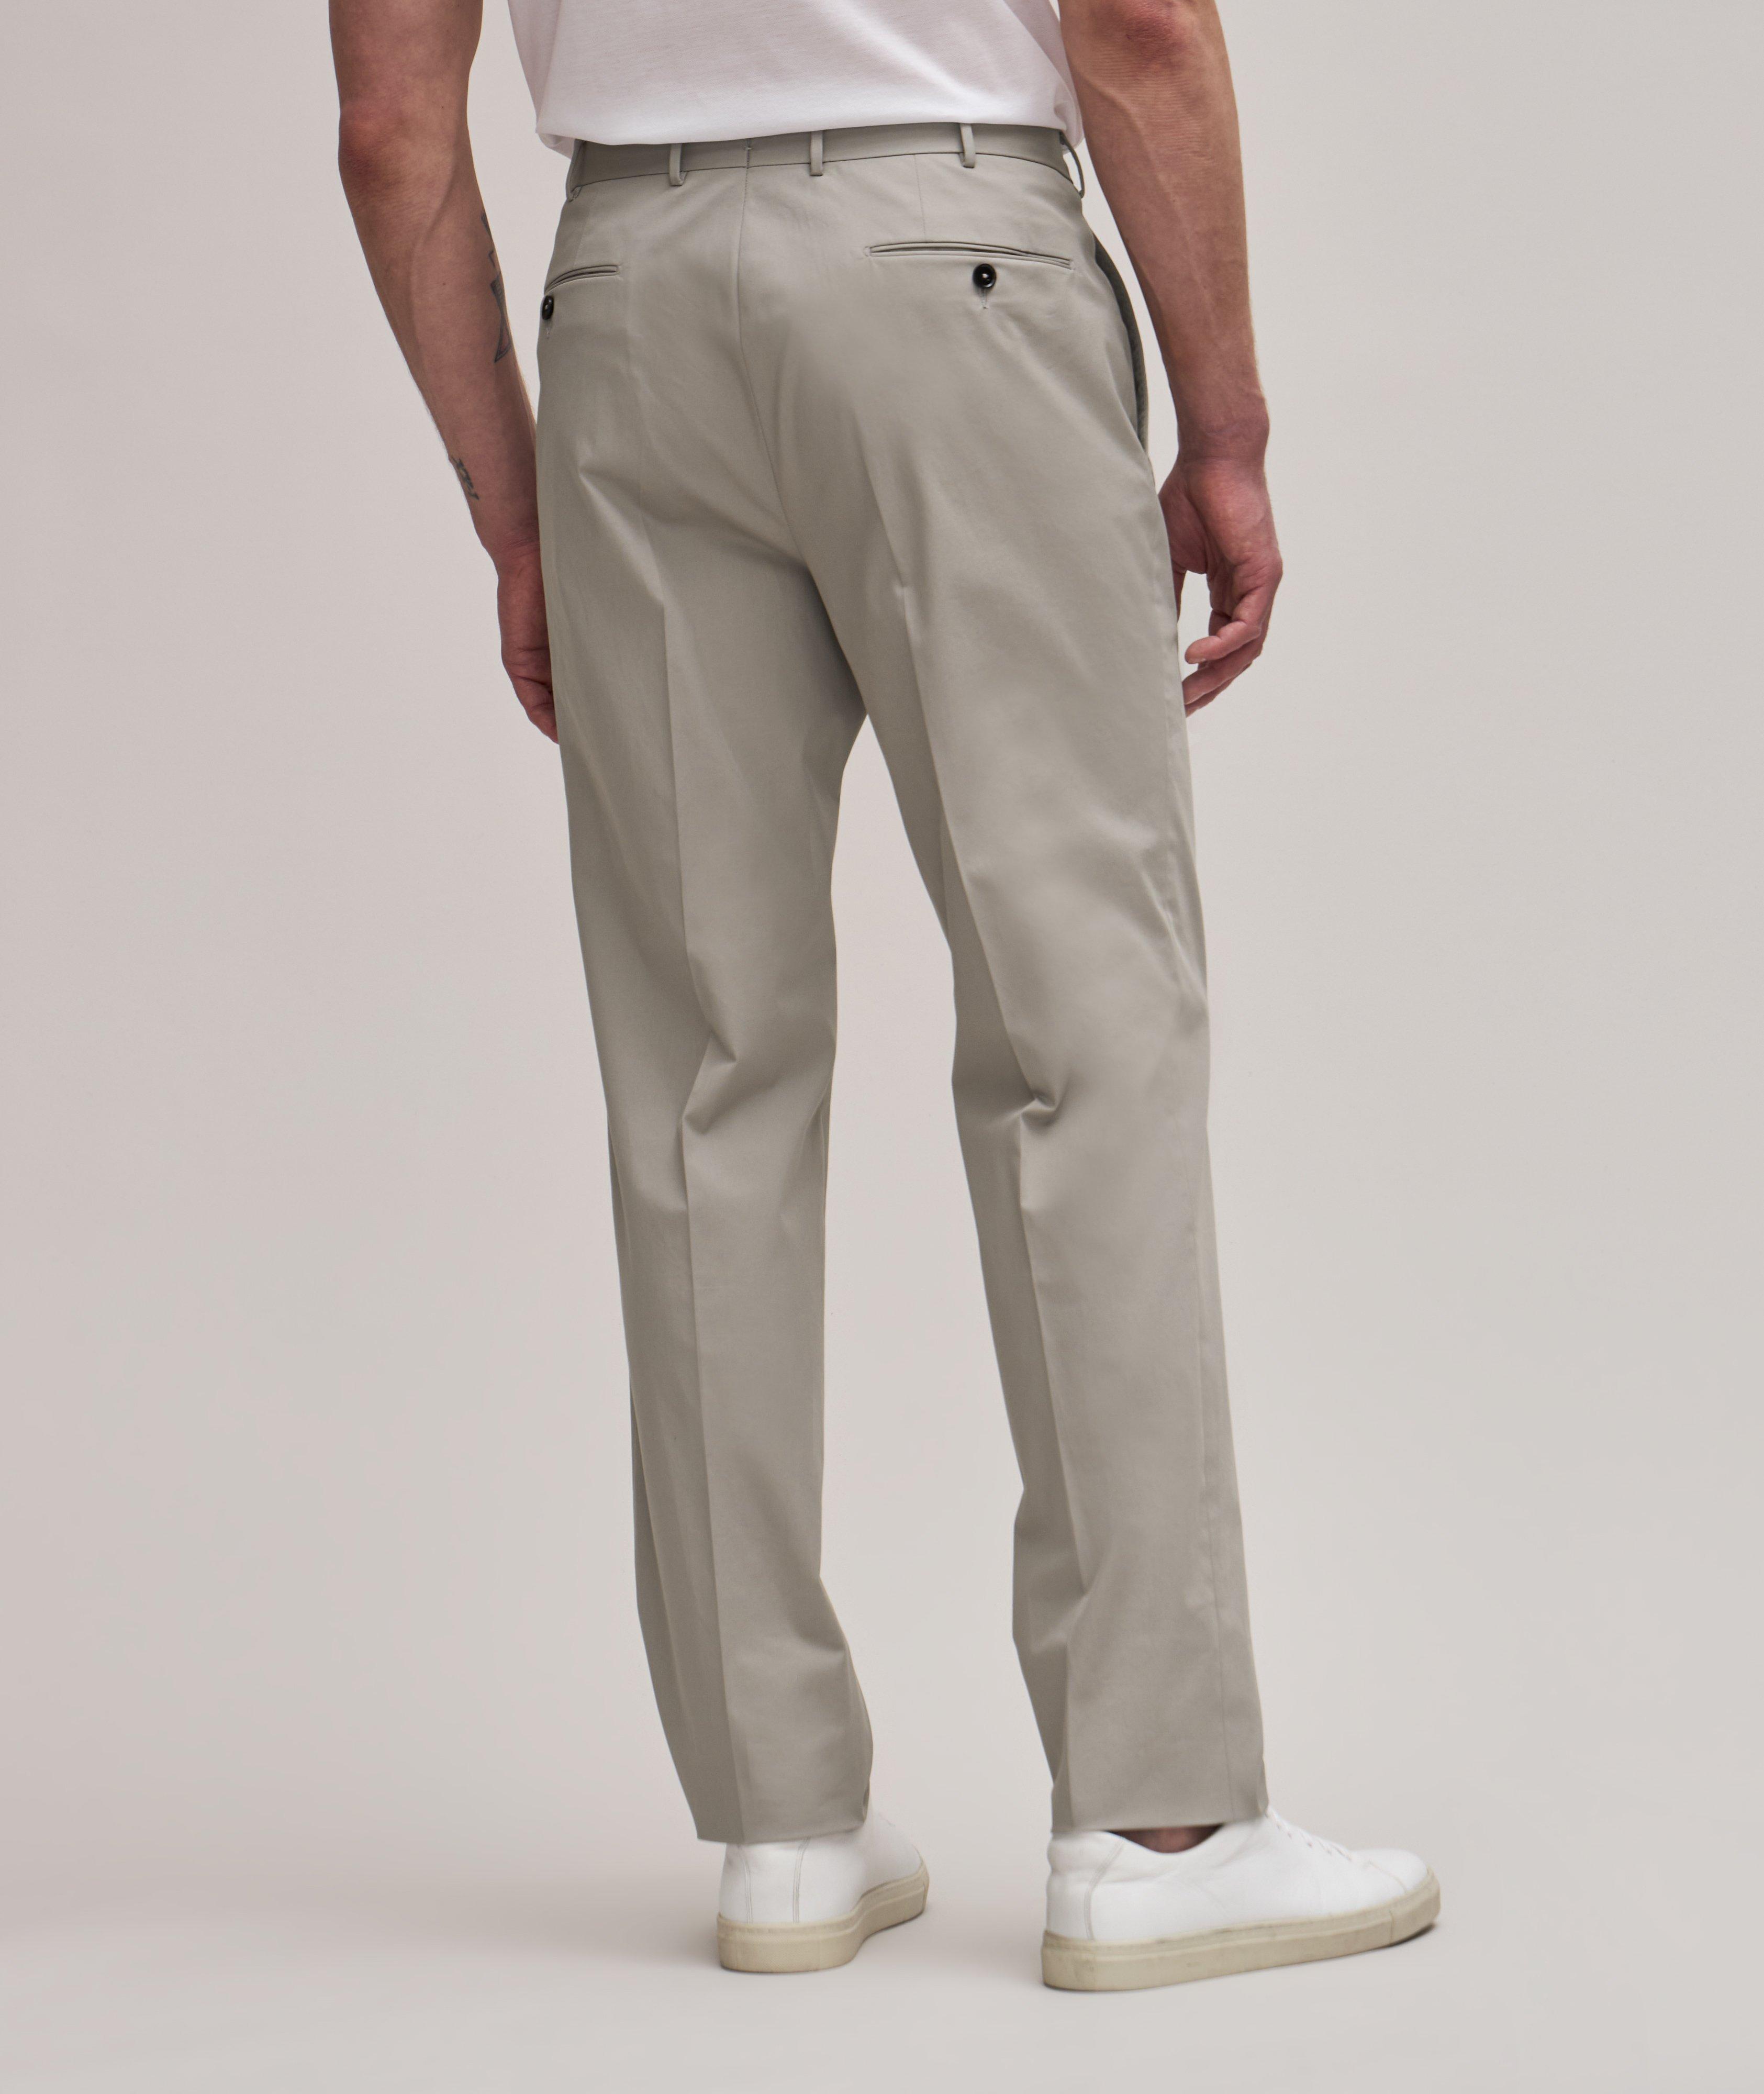 Zegna Sartorial Cotton-Stretch Dress Pants | Pants | Final Cut